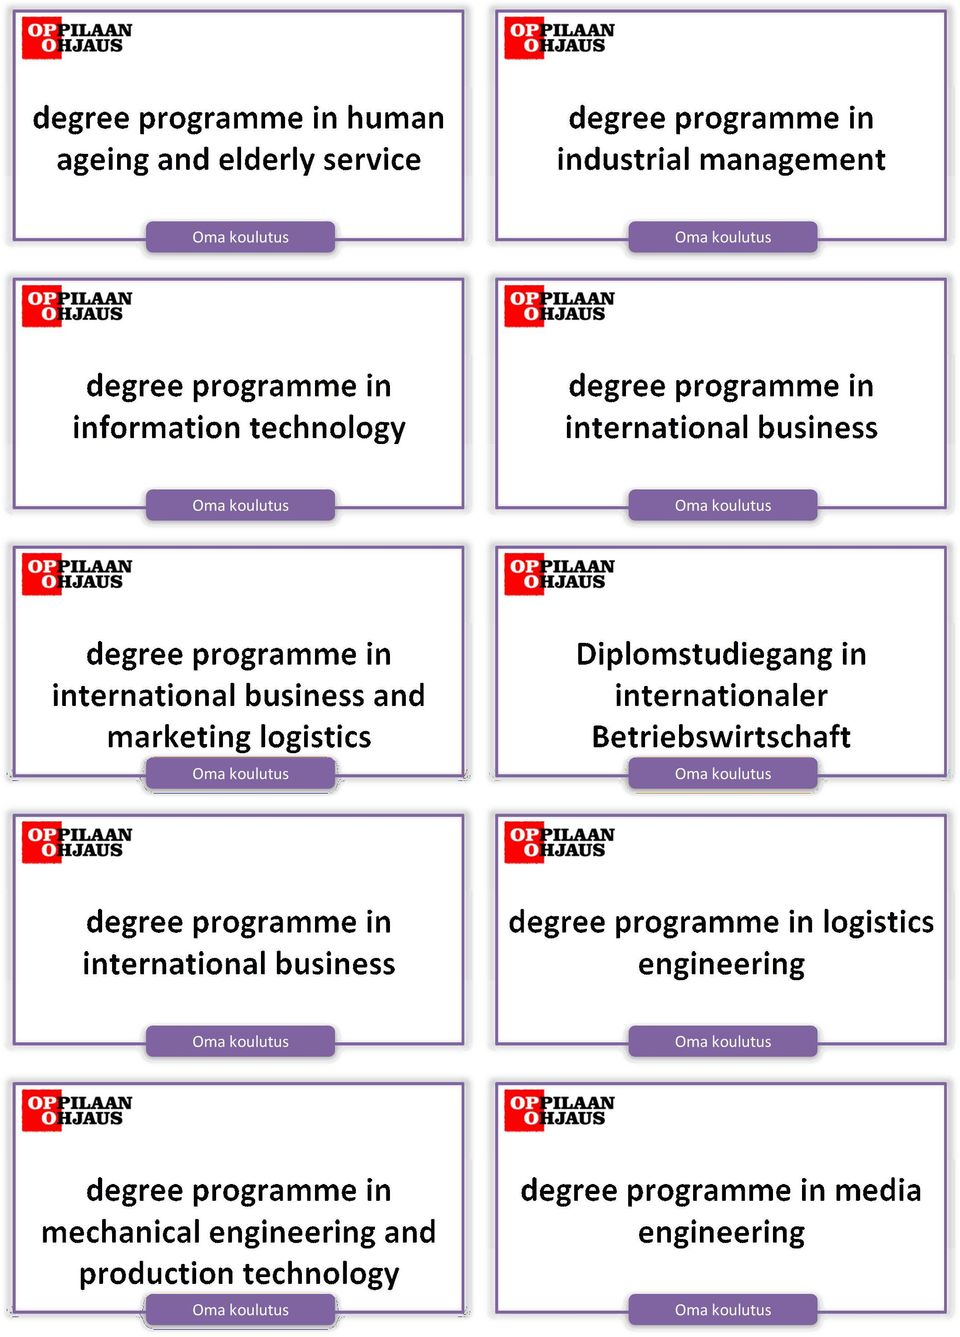 logistics Diplomstudiegang in internationaler Betriebswirtschaft degree programme in international business degree